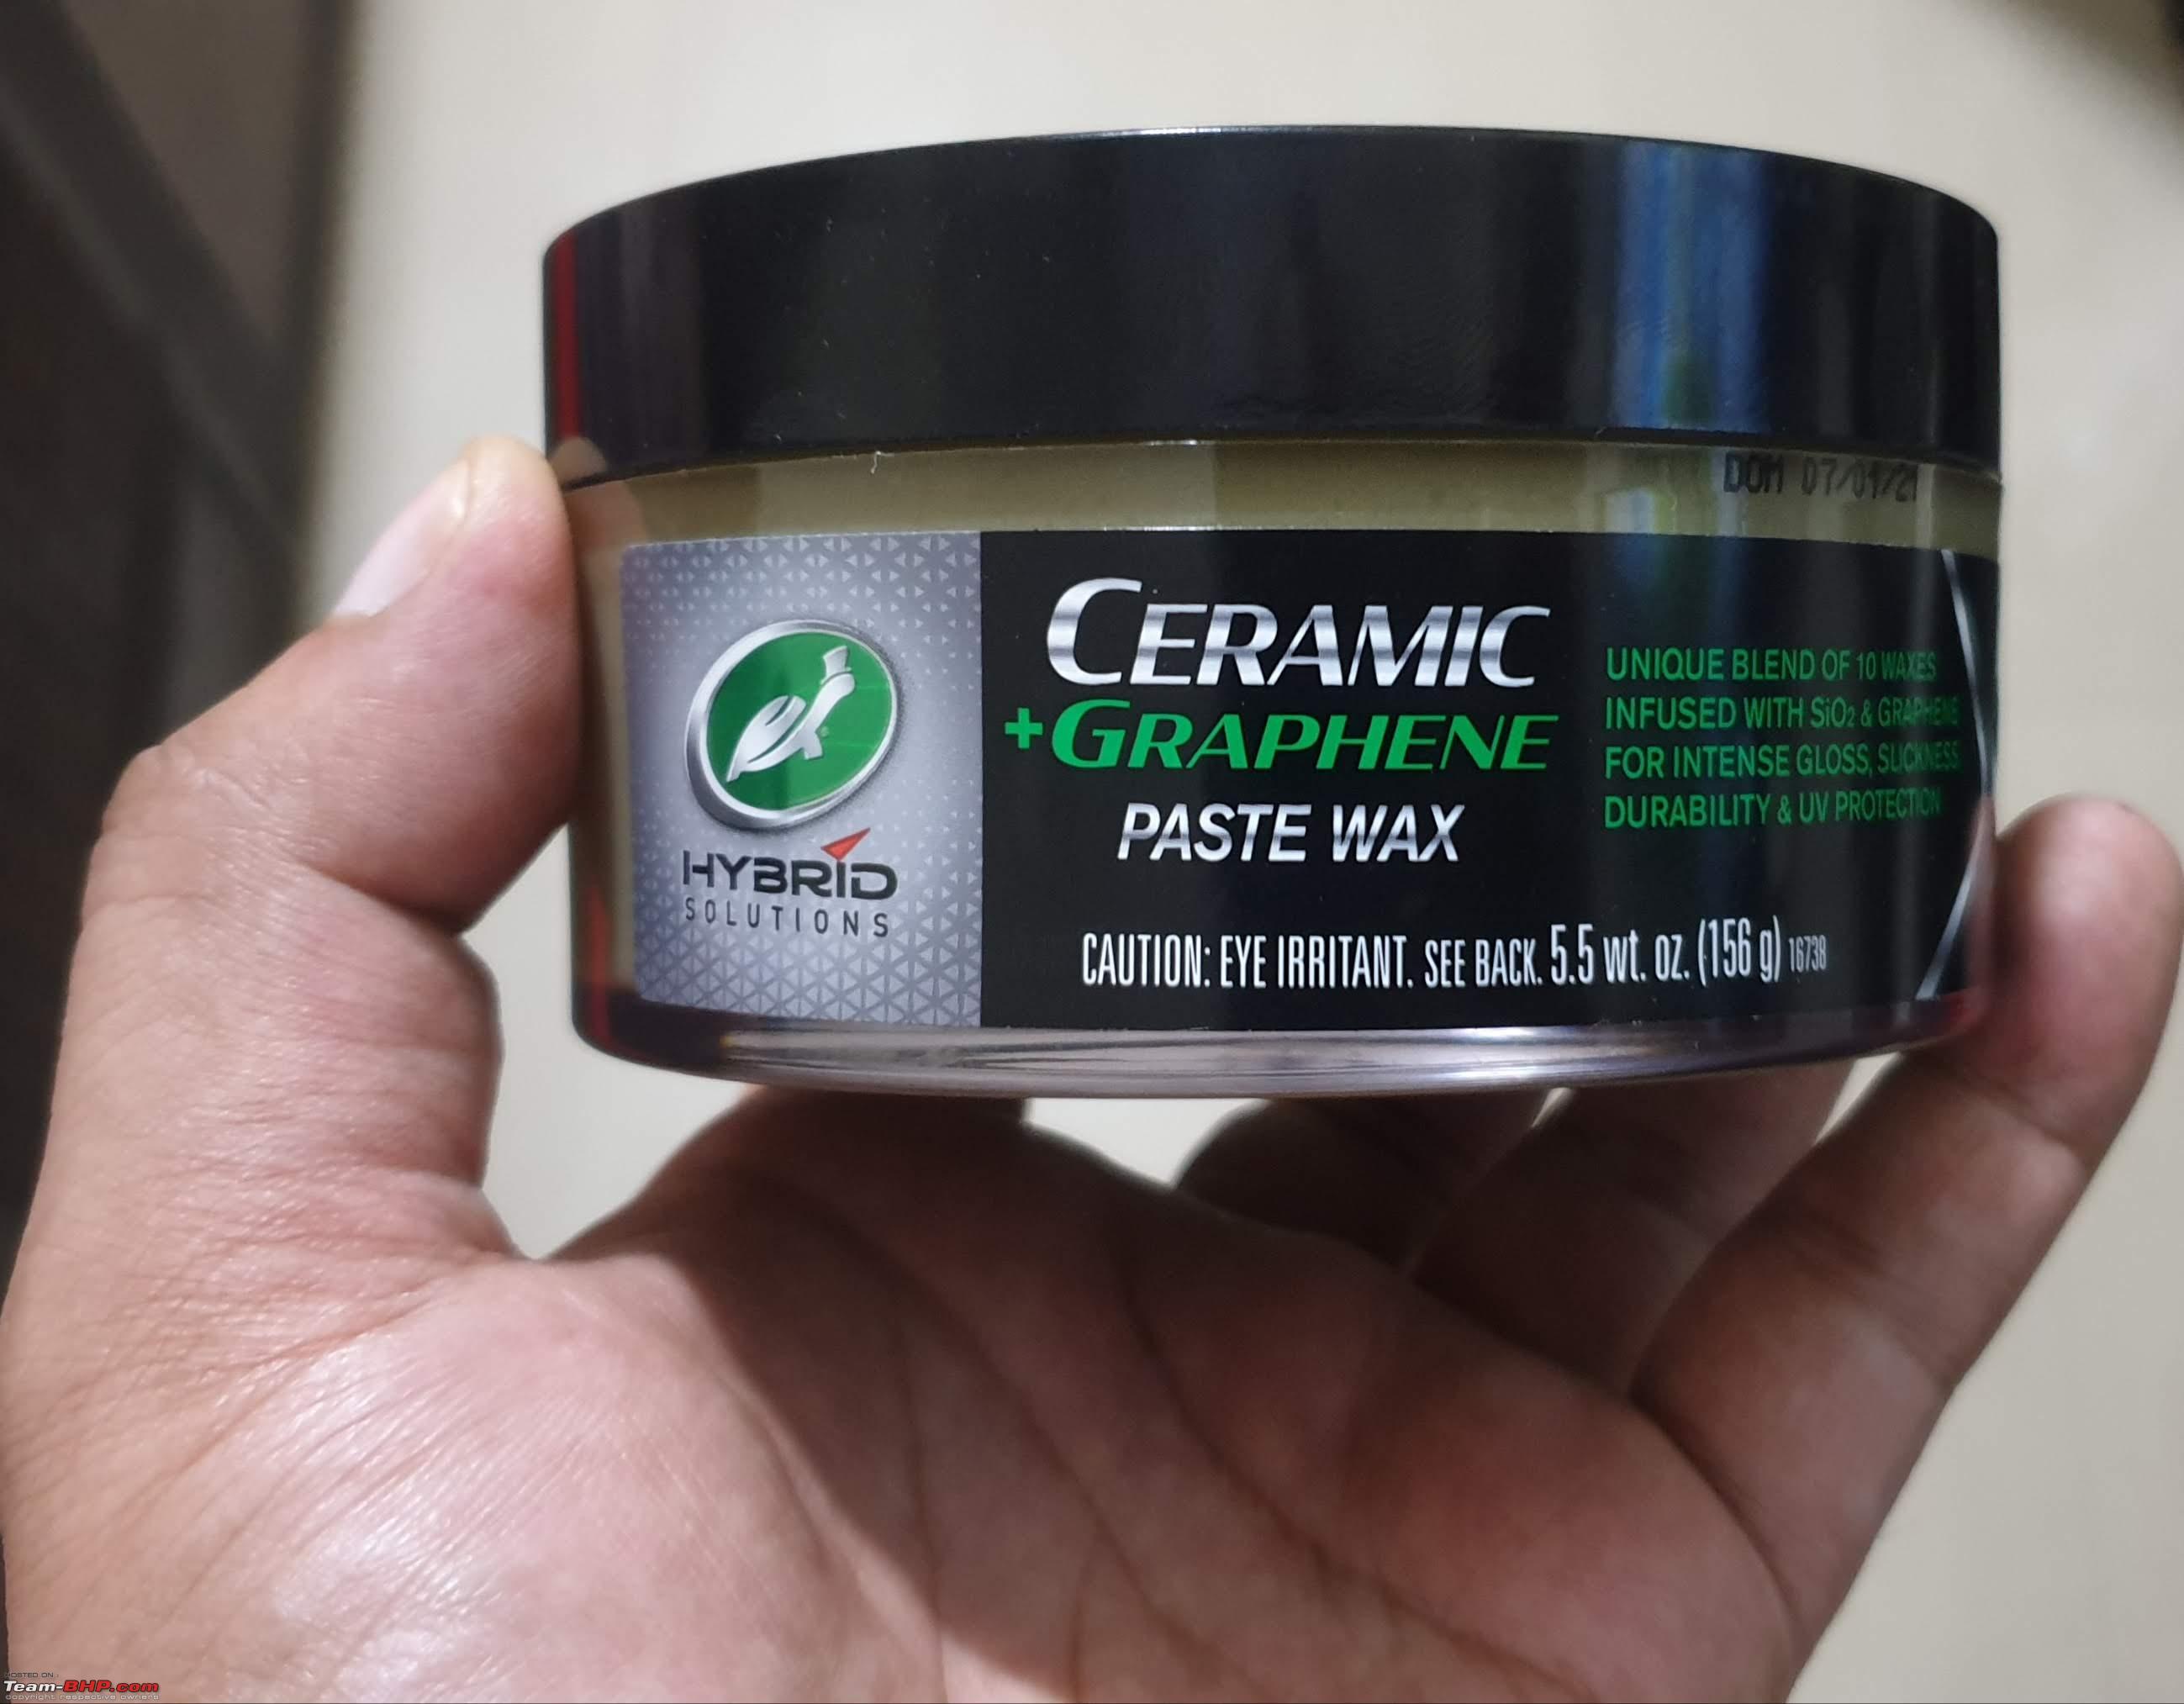 Turtle Wax (Ceramic + Graphene) Paste Wax